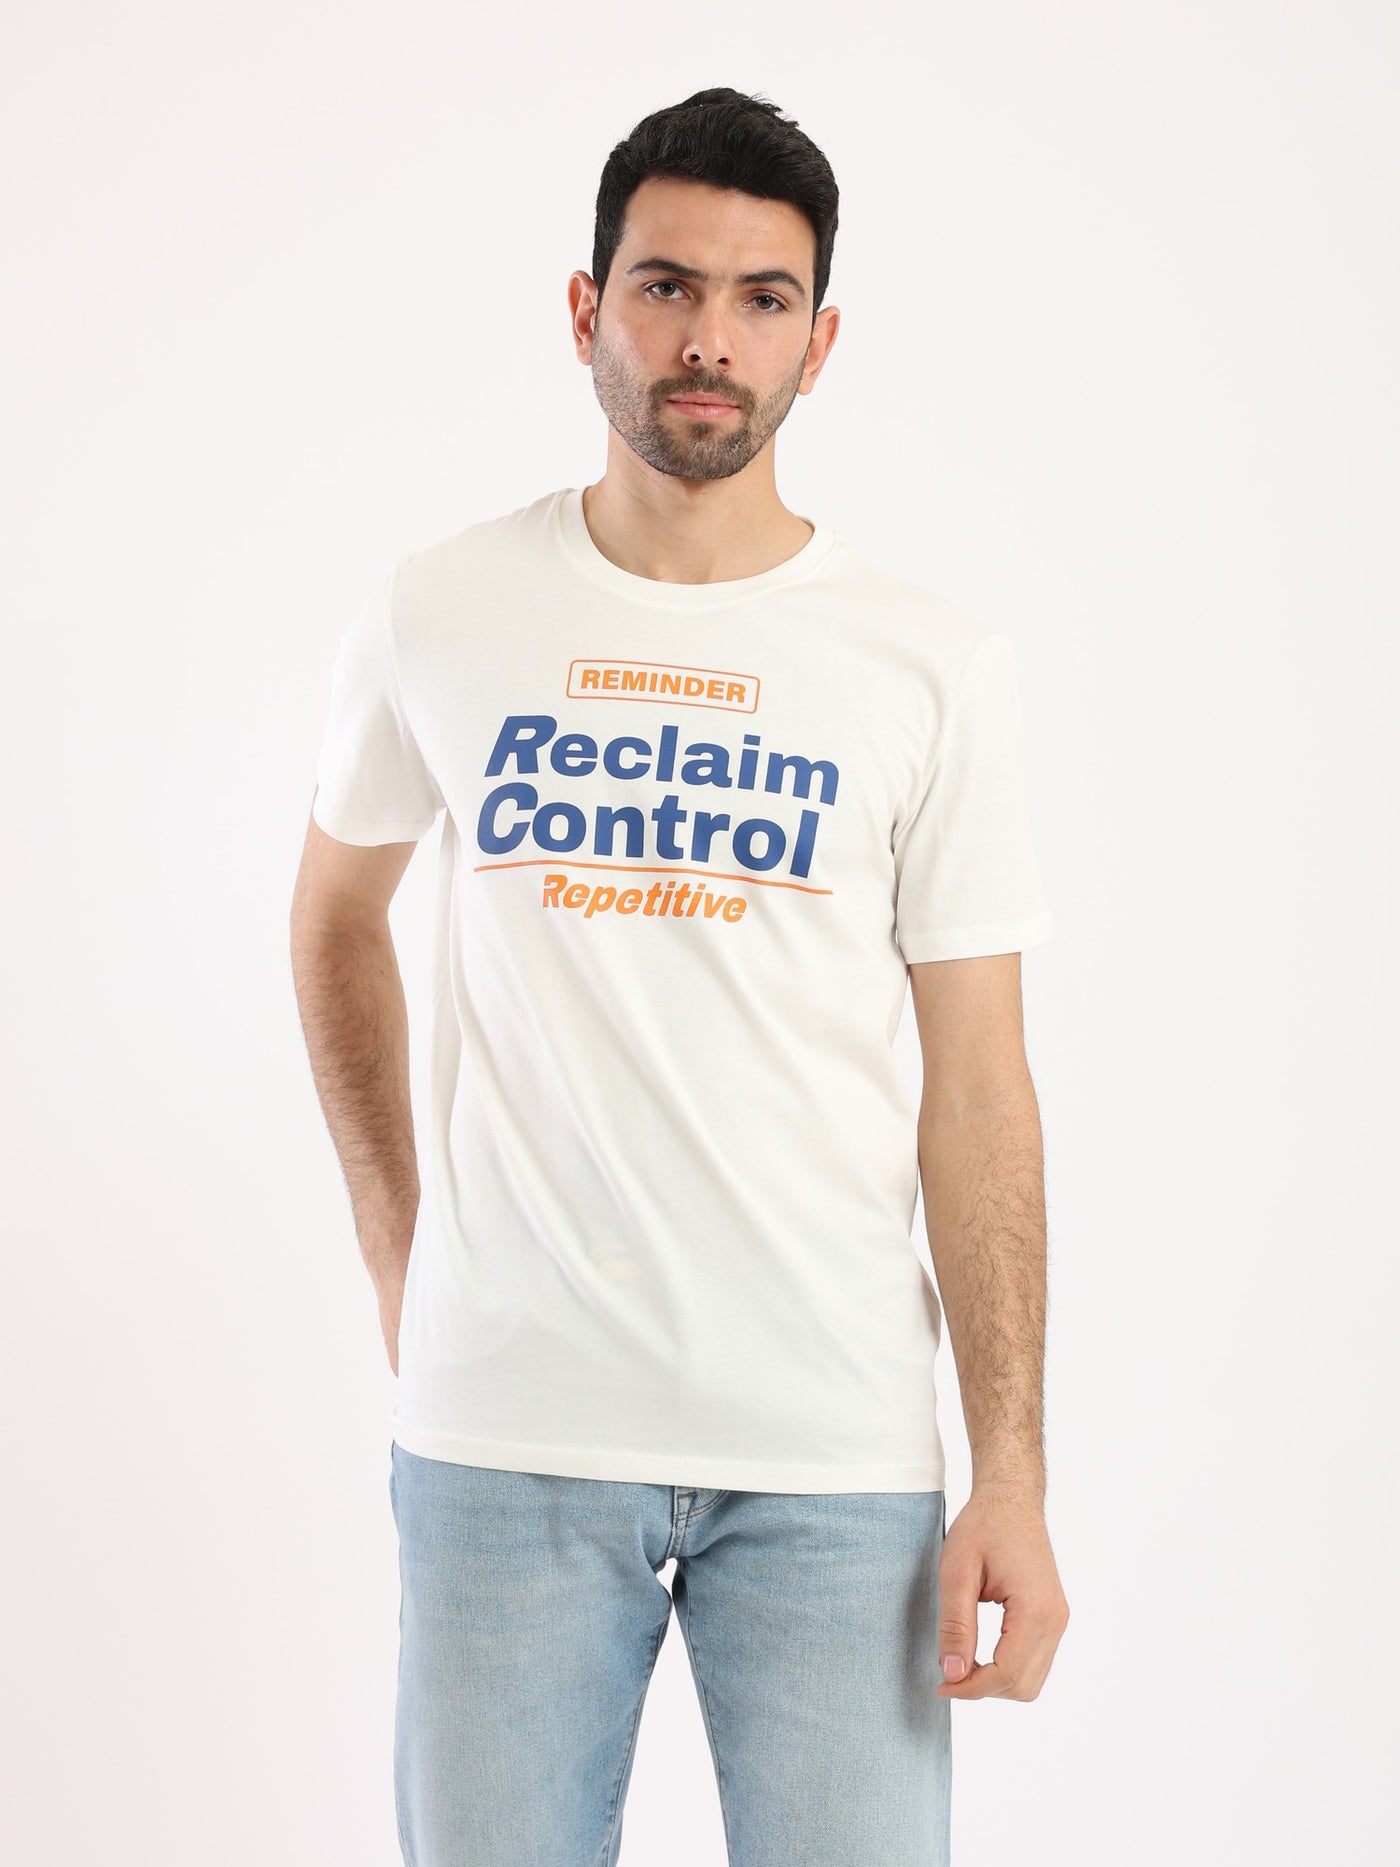 T-Shirt - "Reclaim Control" - Slip-on